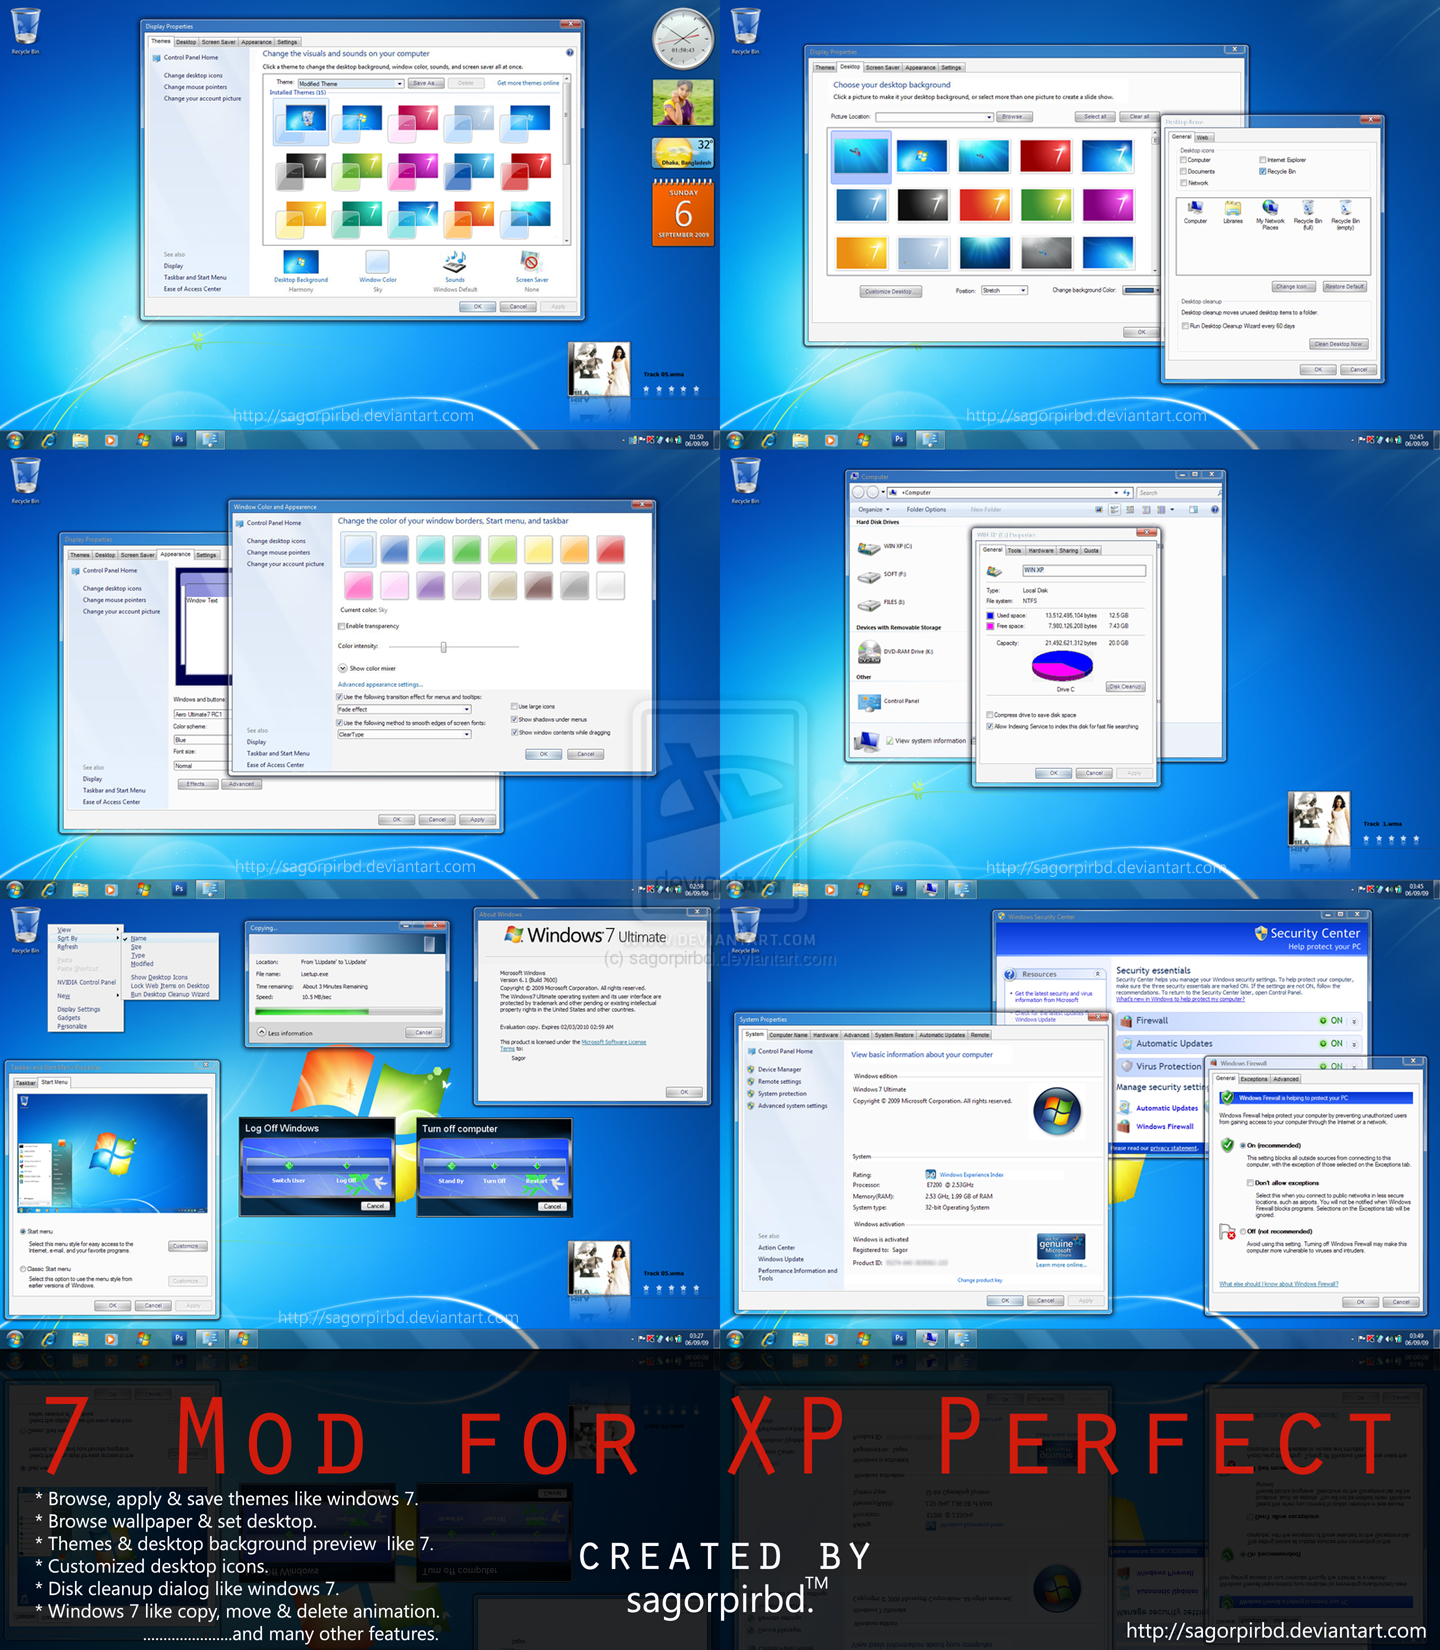 Windows 7 Mod for XP Perfect by sagorpirbd on DeviantArt